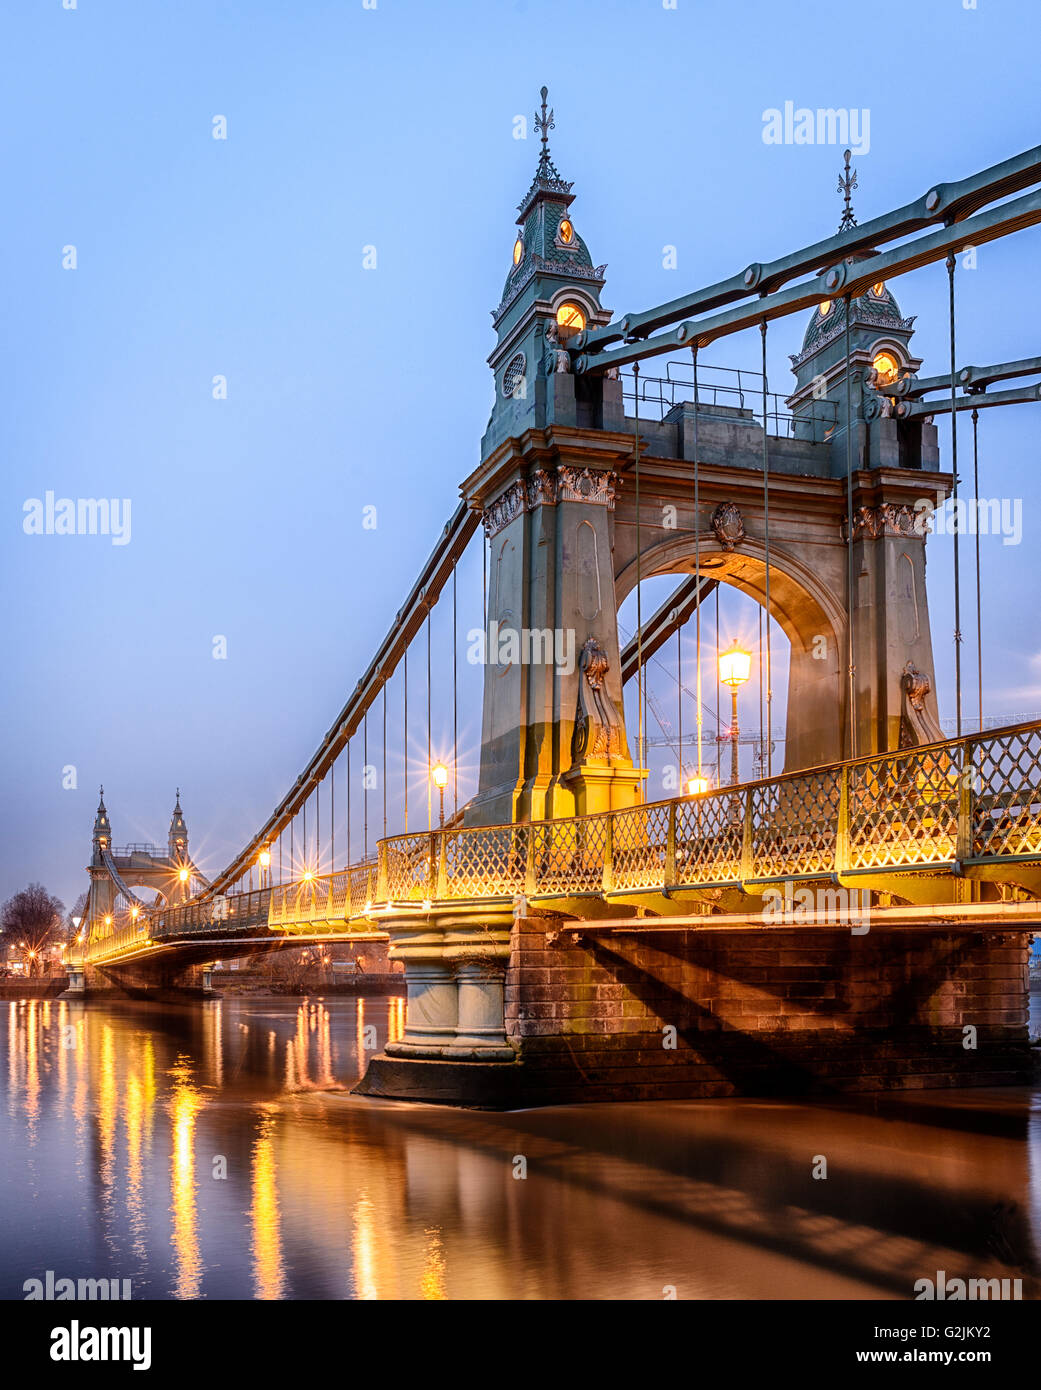 Hammersmith Bridge at Night,London,UK Banque D'Images